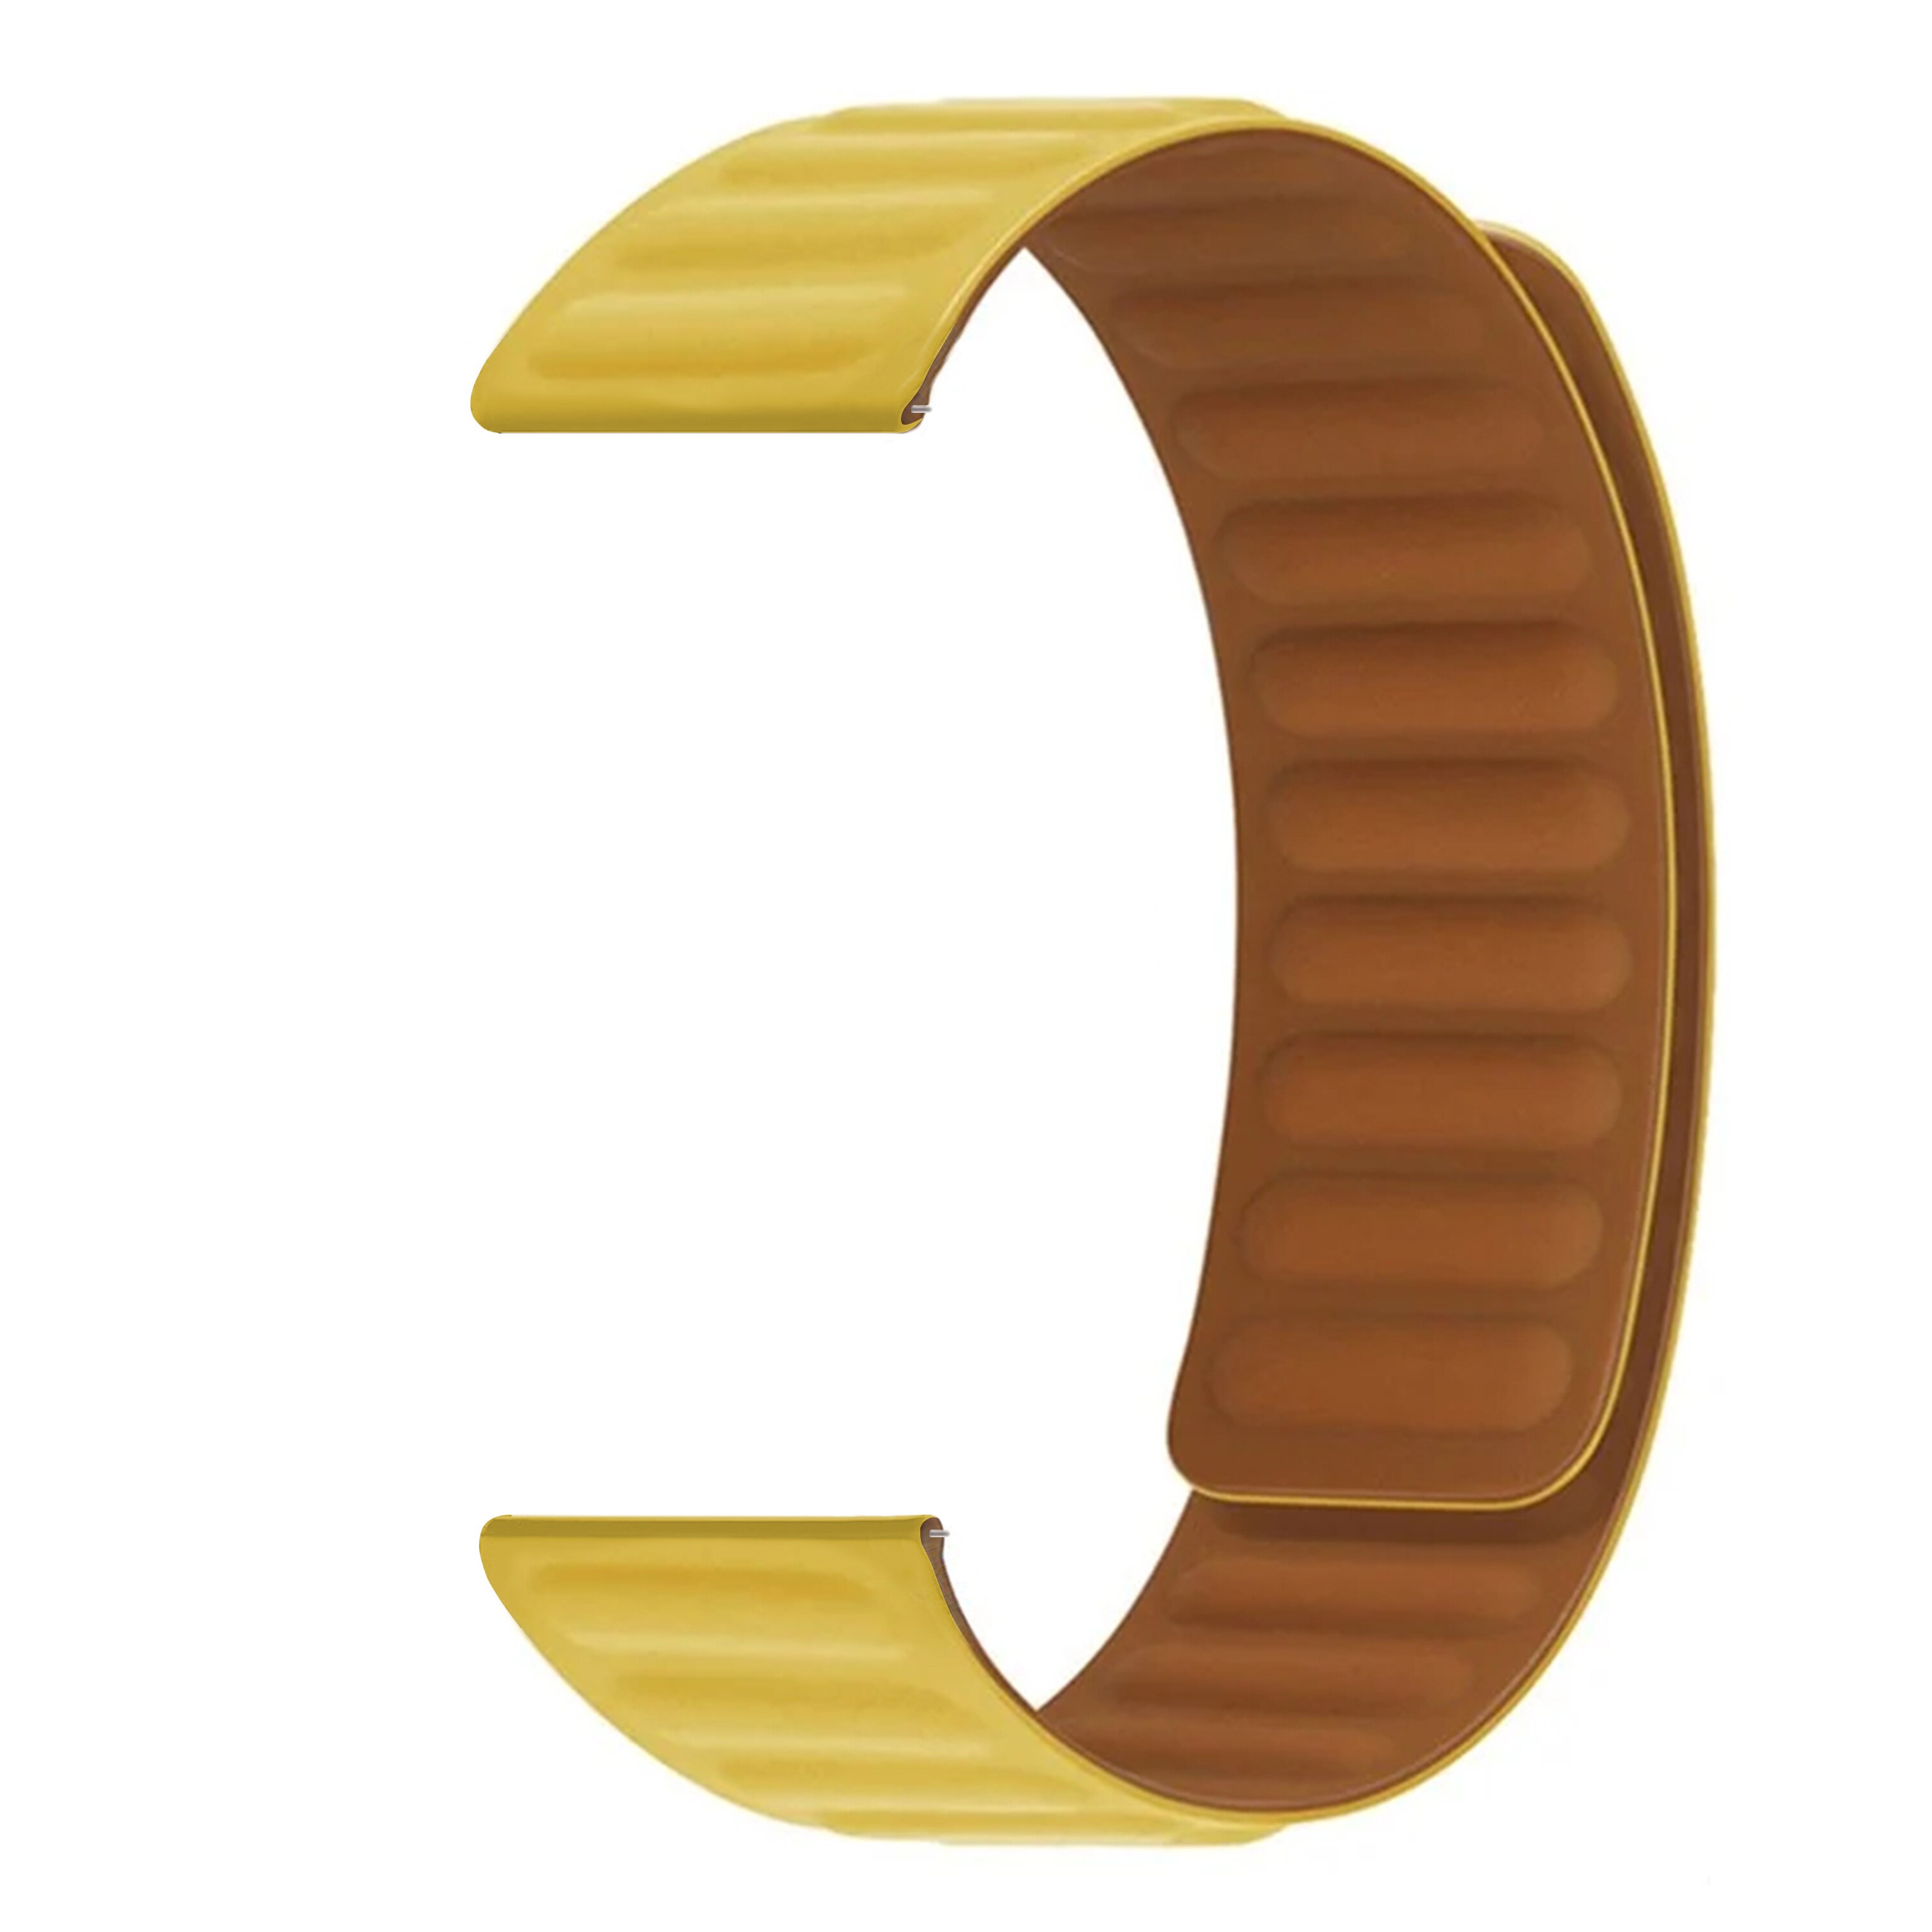 Suunto Race Magnetische Armband aus Silikon gelb